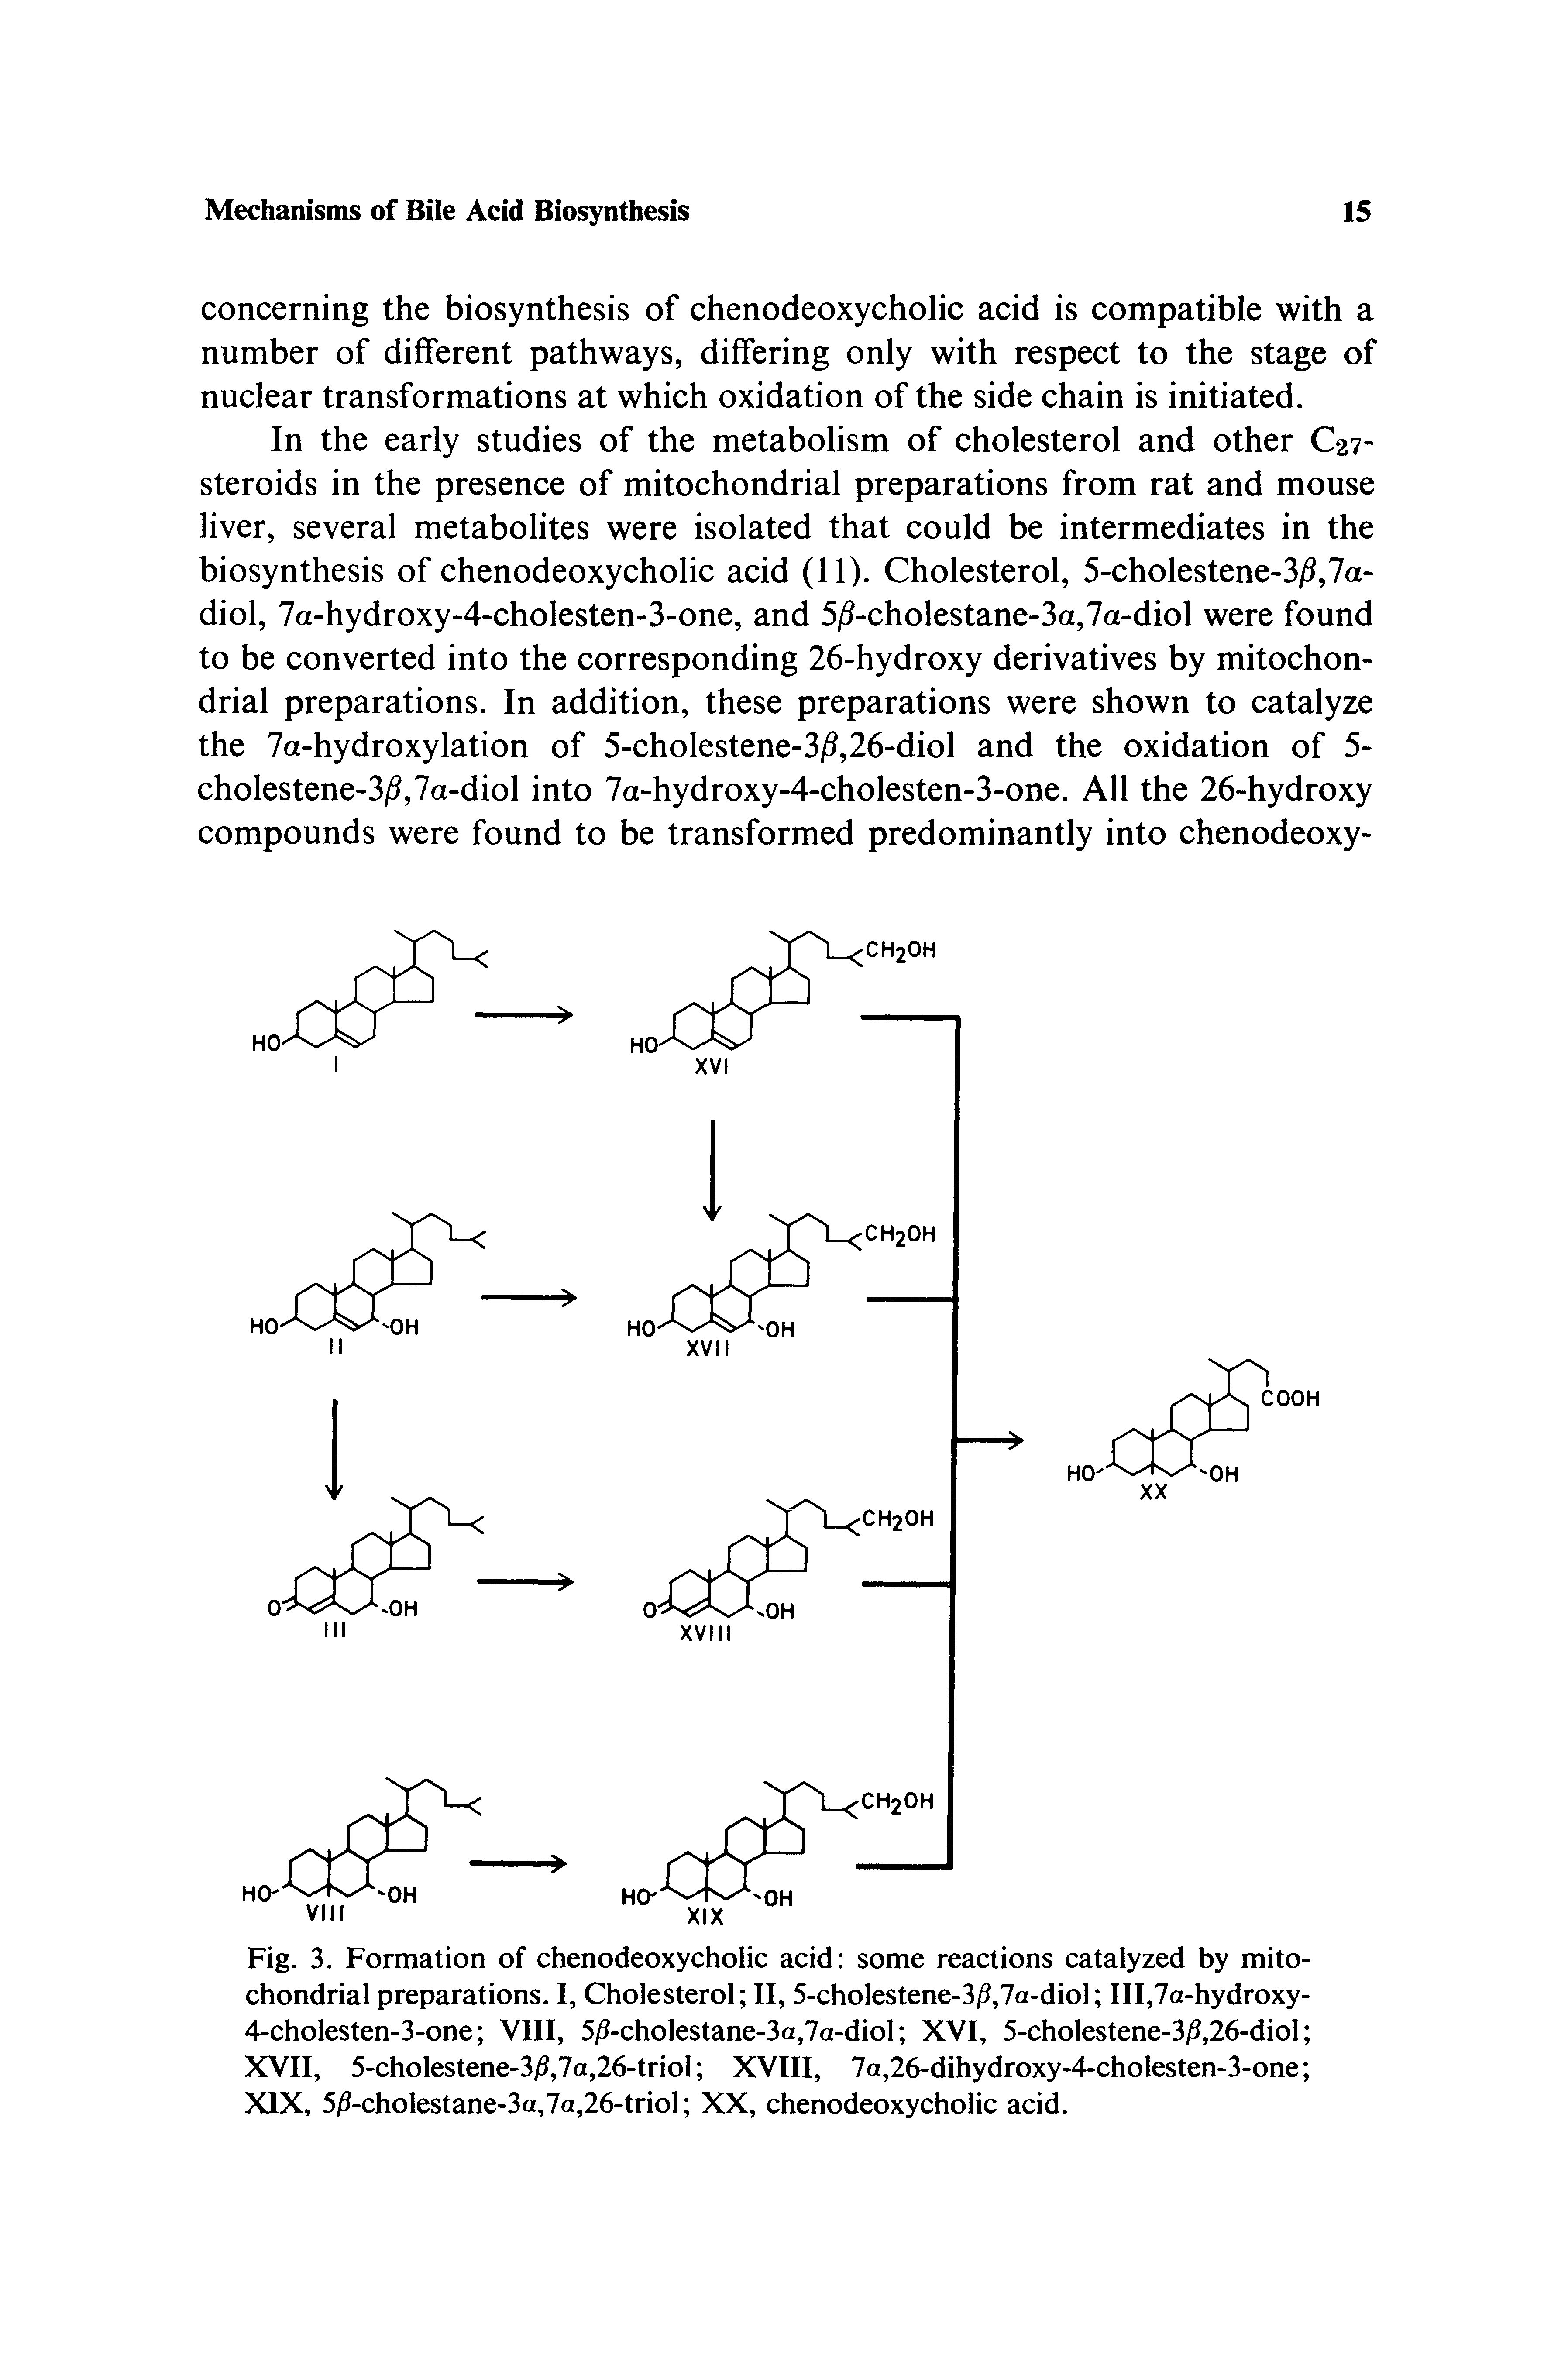 Fig. 3. Formation of chenodeoxycholic acid some reactions catalyzed by mitochondrial preparations. I, Cholesterol II, 5-cholestene-3/9,7a-diol III,7a-hydroxy-4-cholesten-3-one VIII, 5i -cholestane-3a,7a-diol XVI, 5-cholestene-3i3,26-dioI XVII, 5-cholestene-3)3,7a,26-trioI XVIII, 7a,26-dihydroxy-4-choIesten-3-one XIX, 5 -cholestane-3a,7a,26-triol XX, chenodeoxycholic acid.